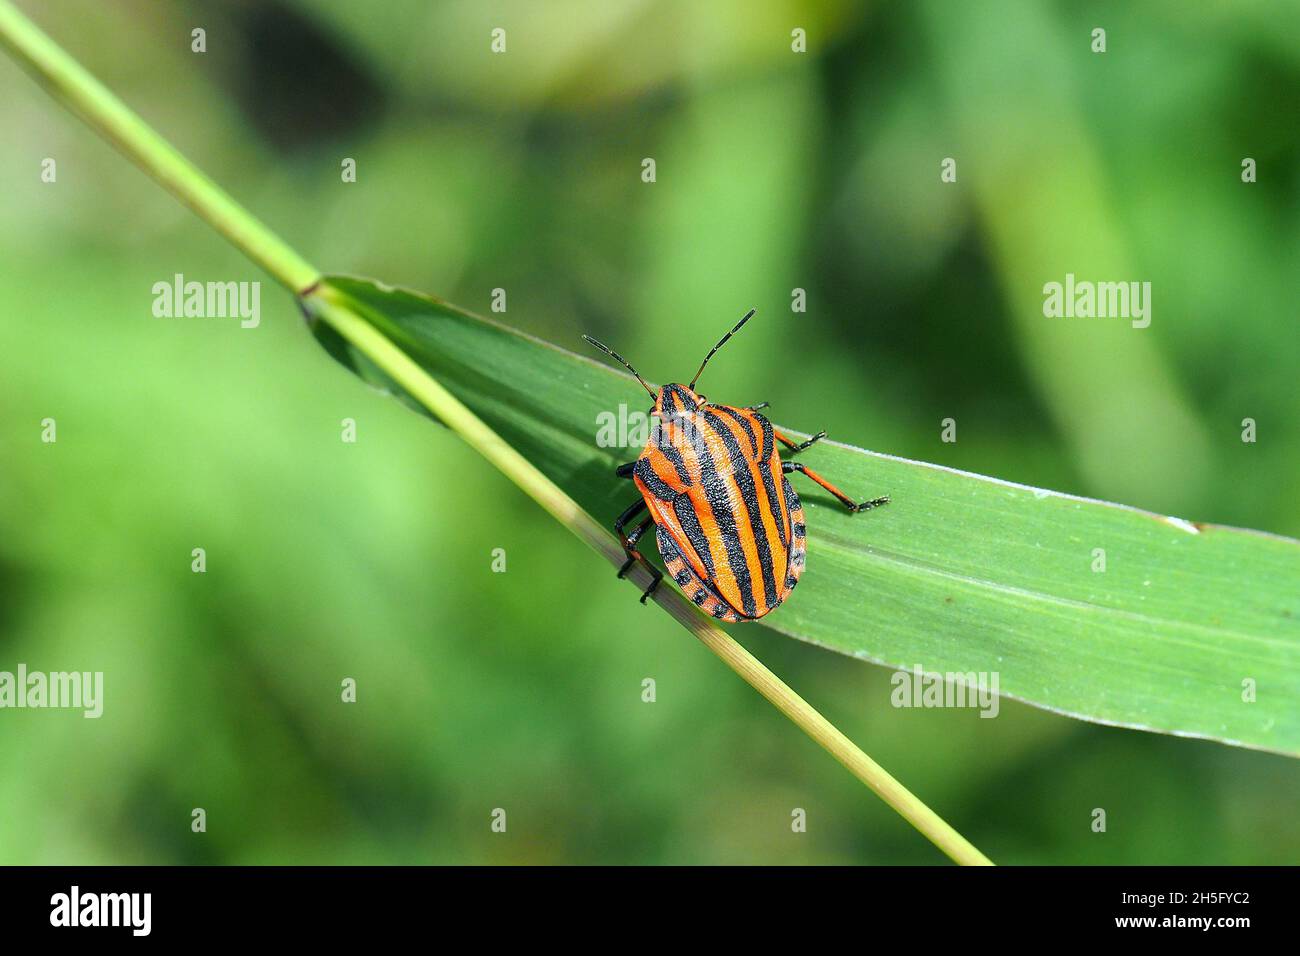 Striped bug, Streifenwanze, Graphosoma lineatum, csíkos pajzsospoloska, Budapest, Hungary, Magyarország, Europe Stock Photo